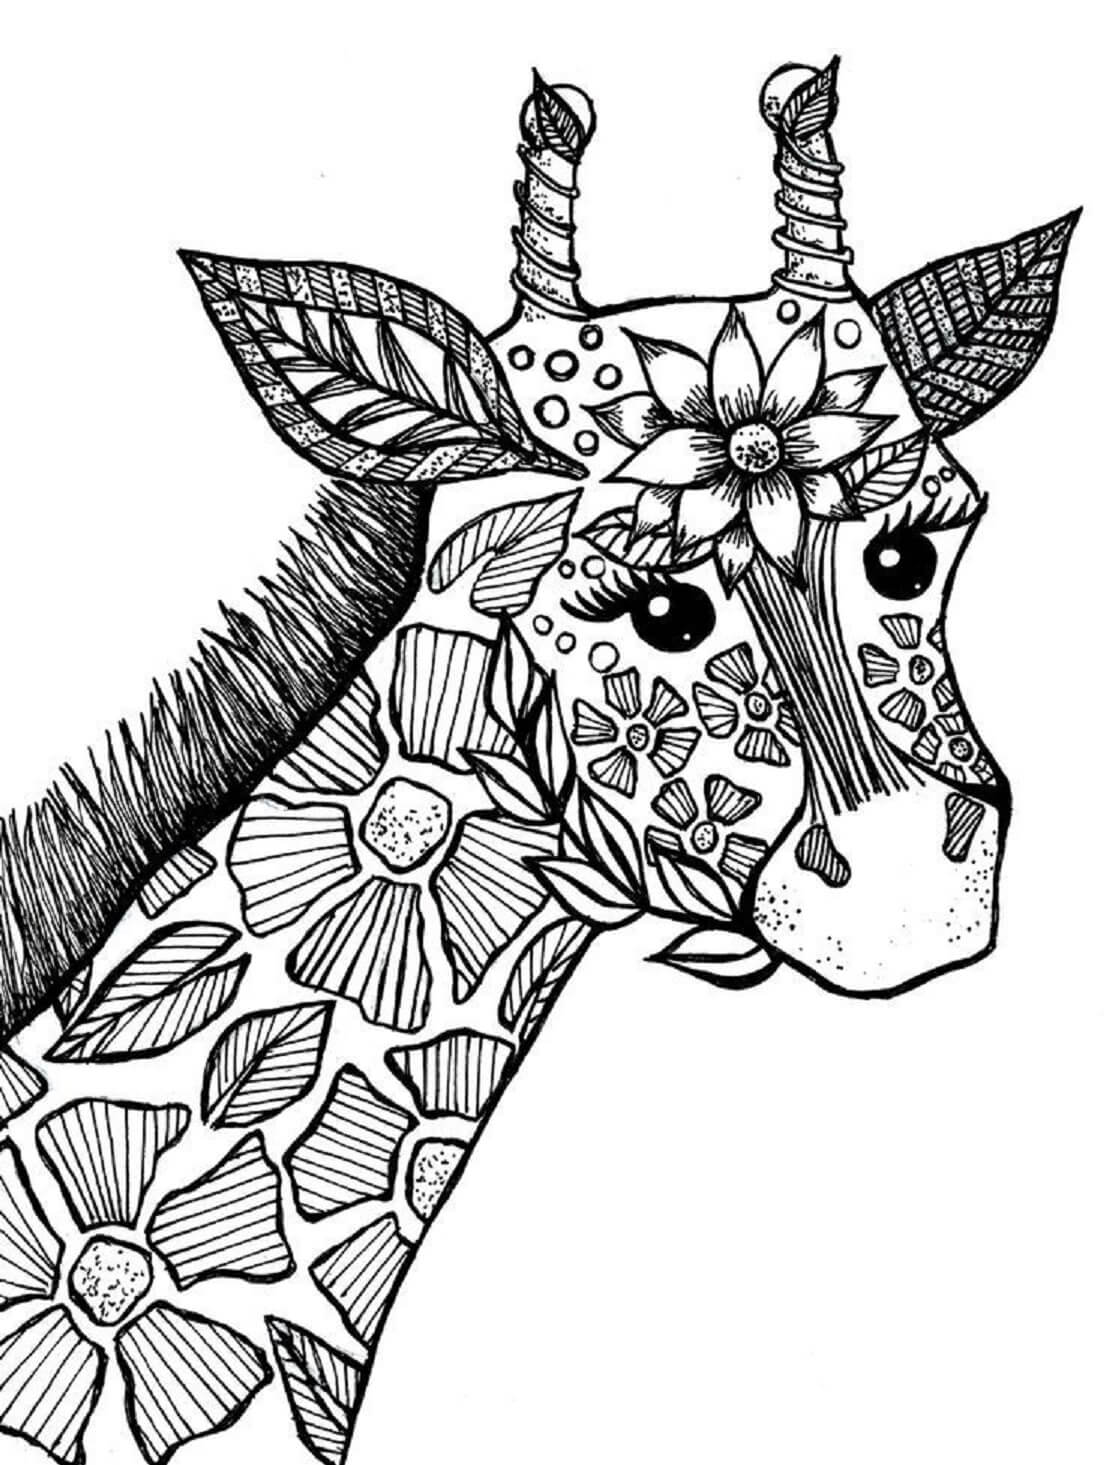 Mandala Portrait of Giraffe Coloring Page Mandalas